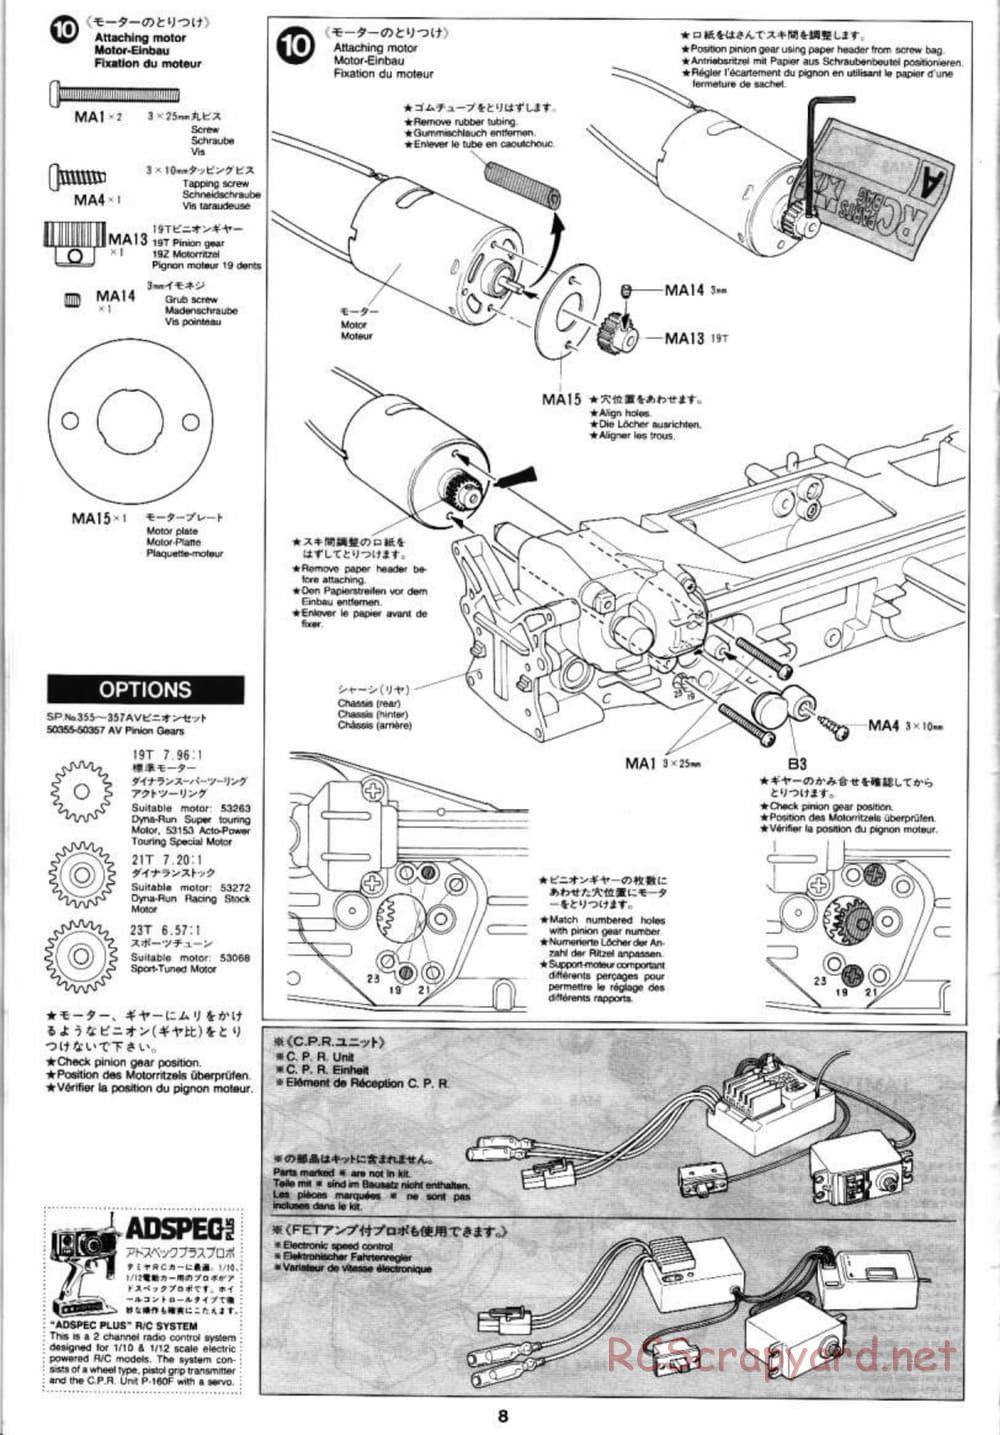 Tamiya - Peugeot 406 ST - TL-01 Chassis - Manual - Page 8